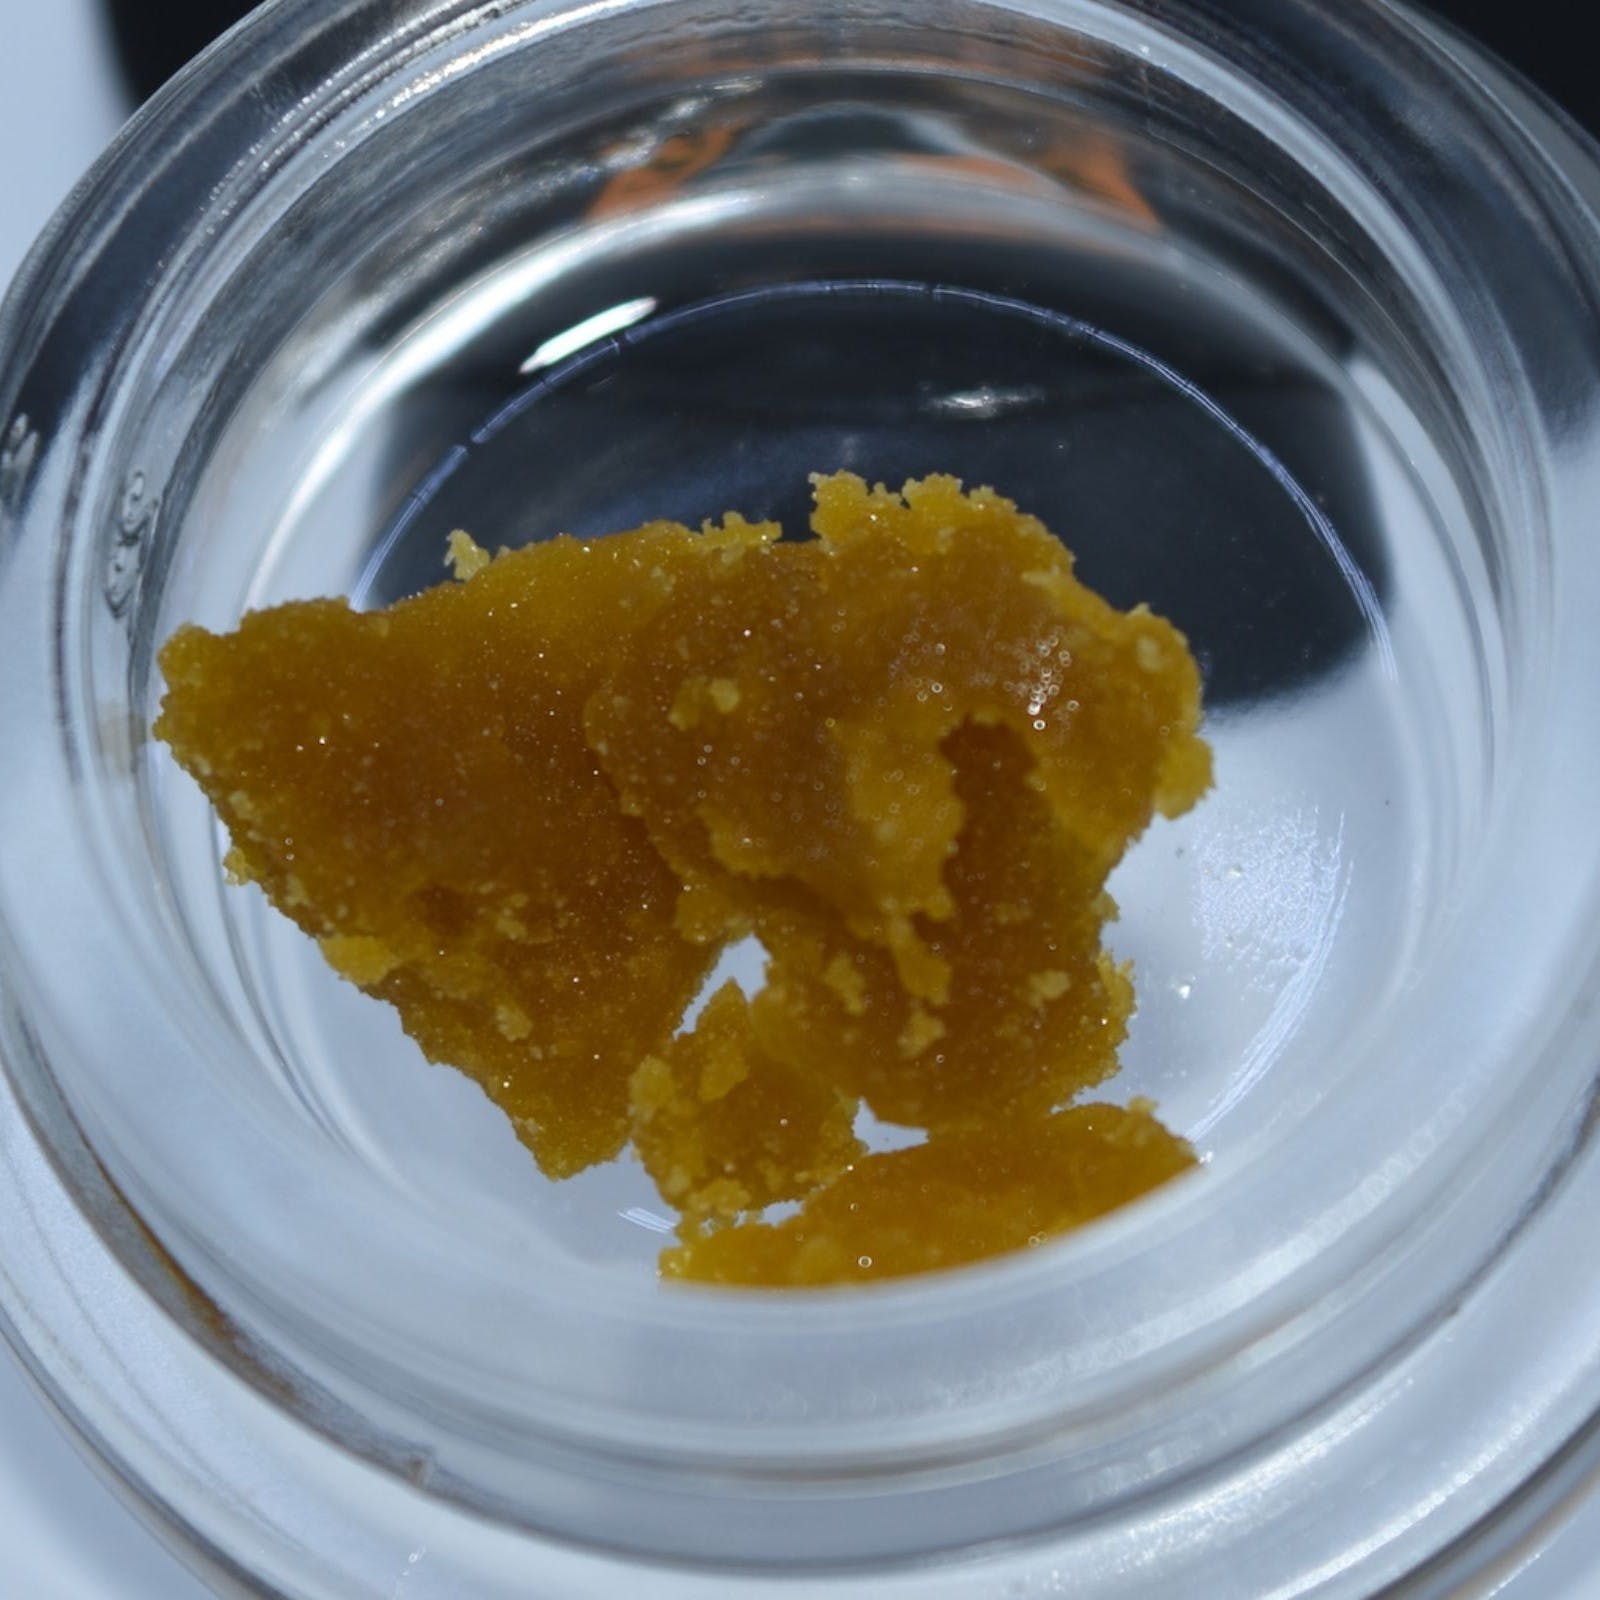 marijuana-dispensaries-higher-grade-recreational-in-denver-kush-concentrates-sugar-wax